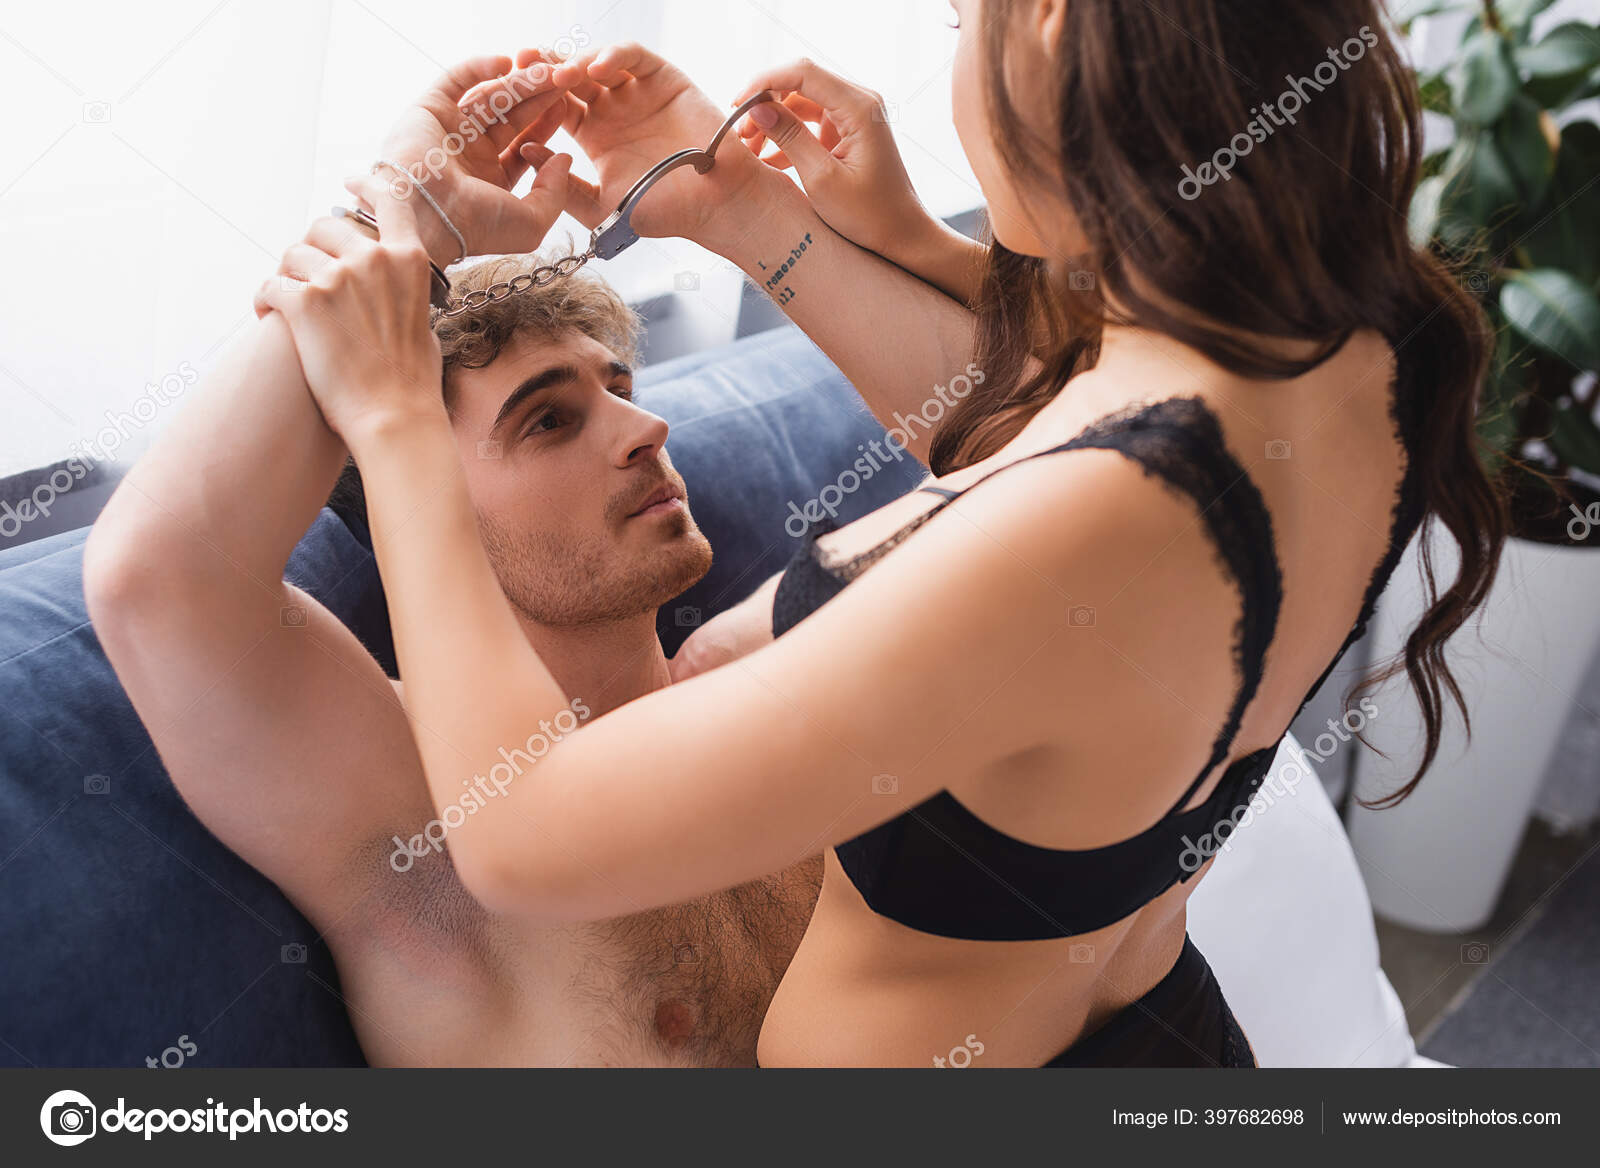 Dominant Woman Touching Handcuffed Tattooed Man Bedroom Stock Photo by ©VitalikRadko 397682698 Sex Image Hq